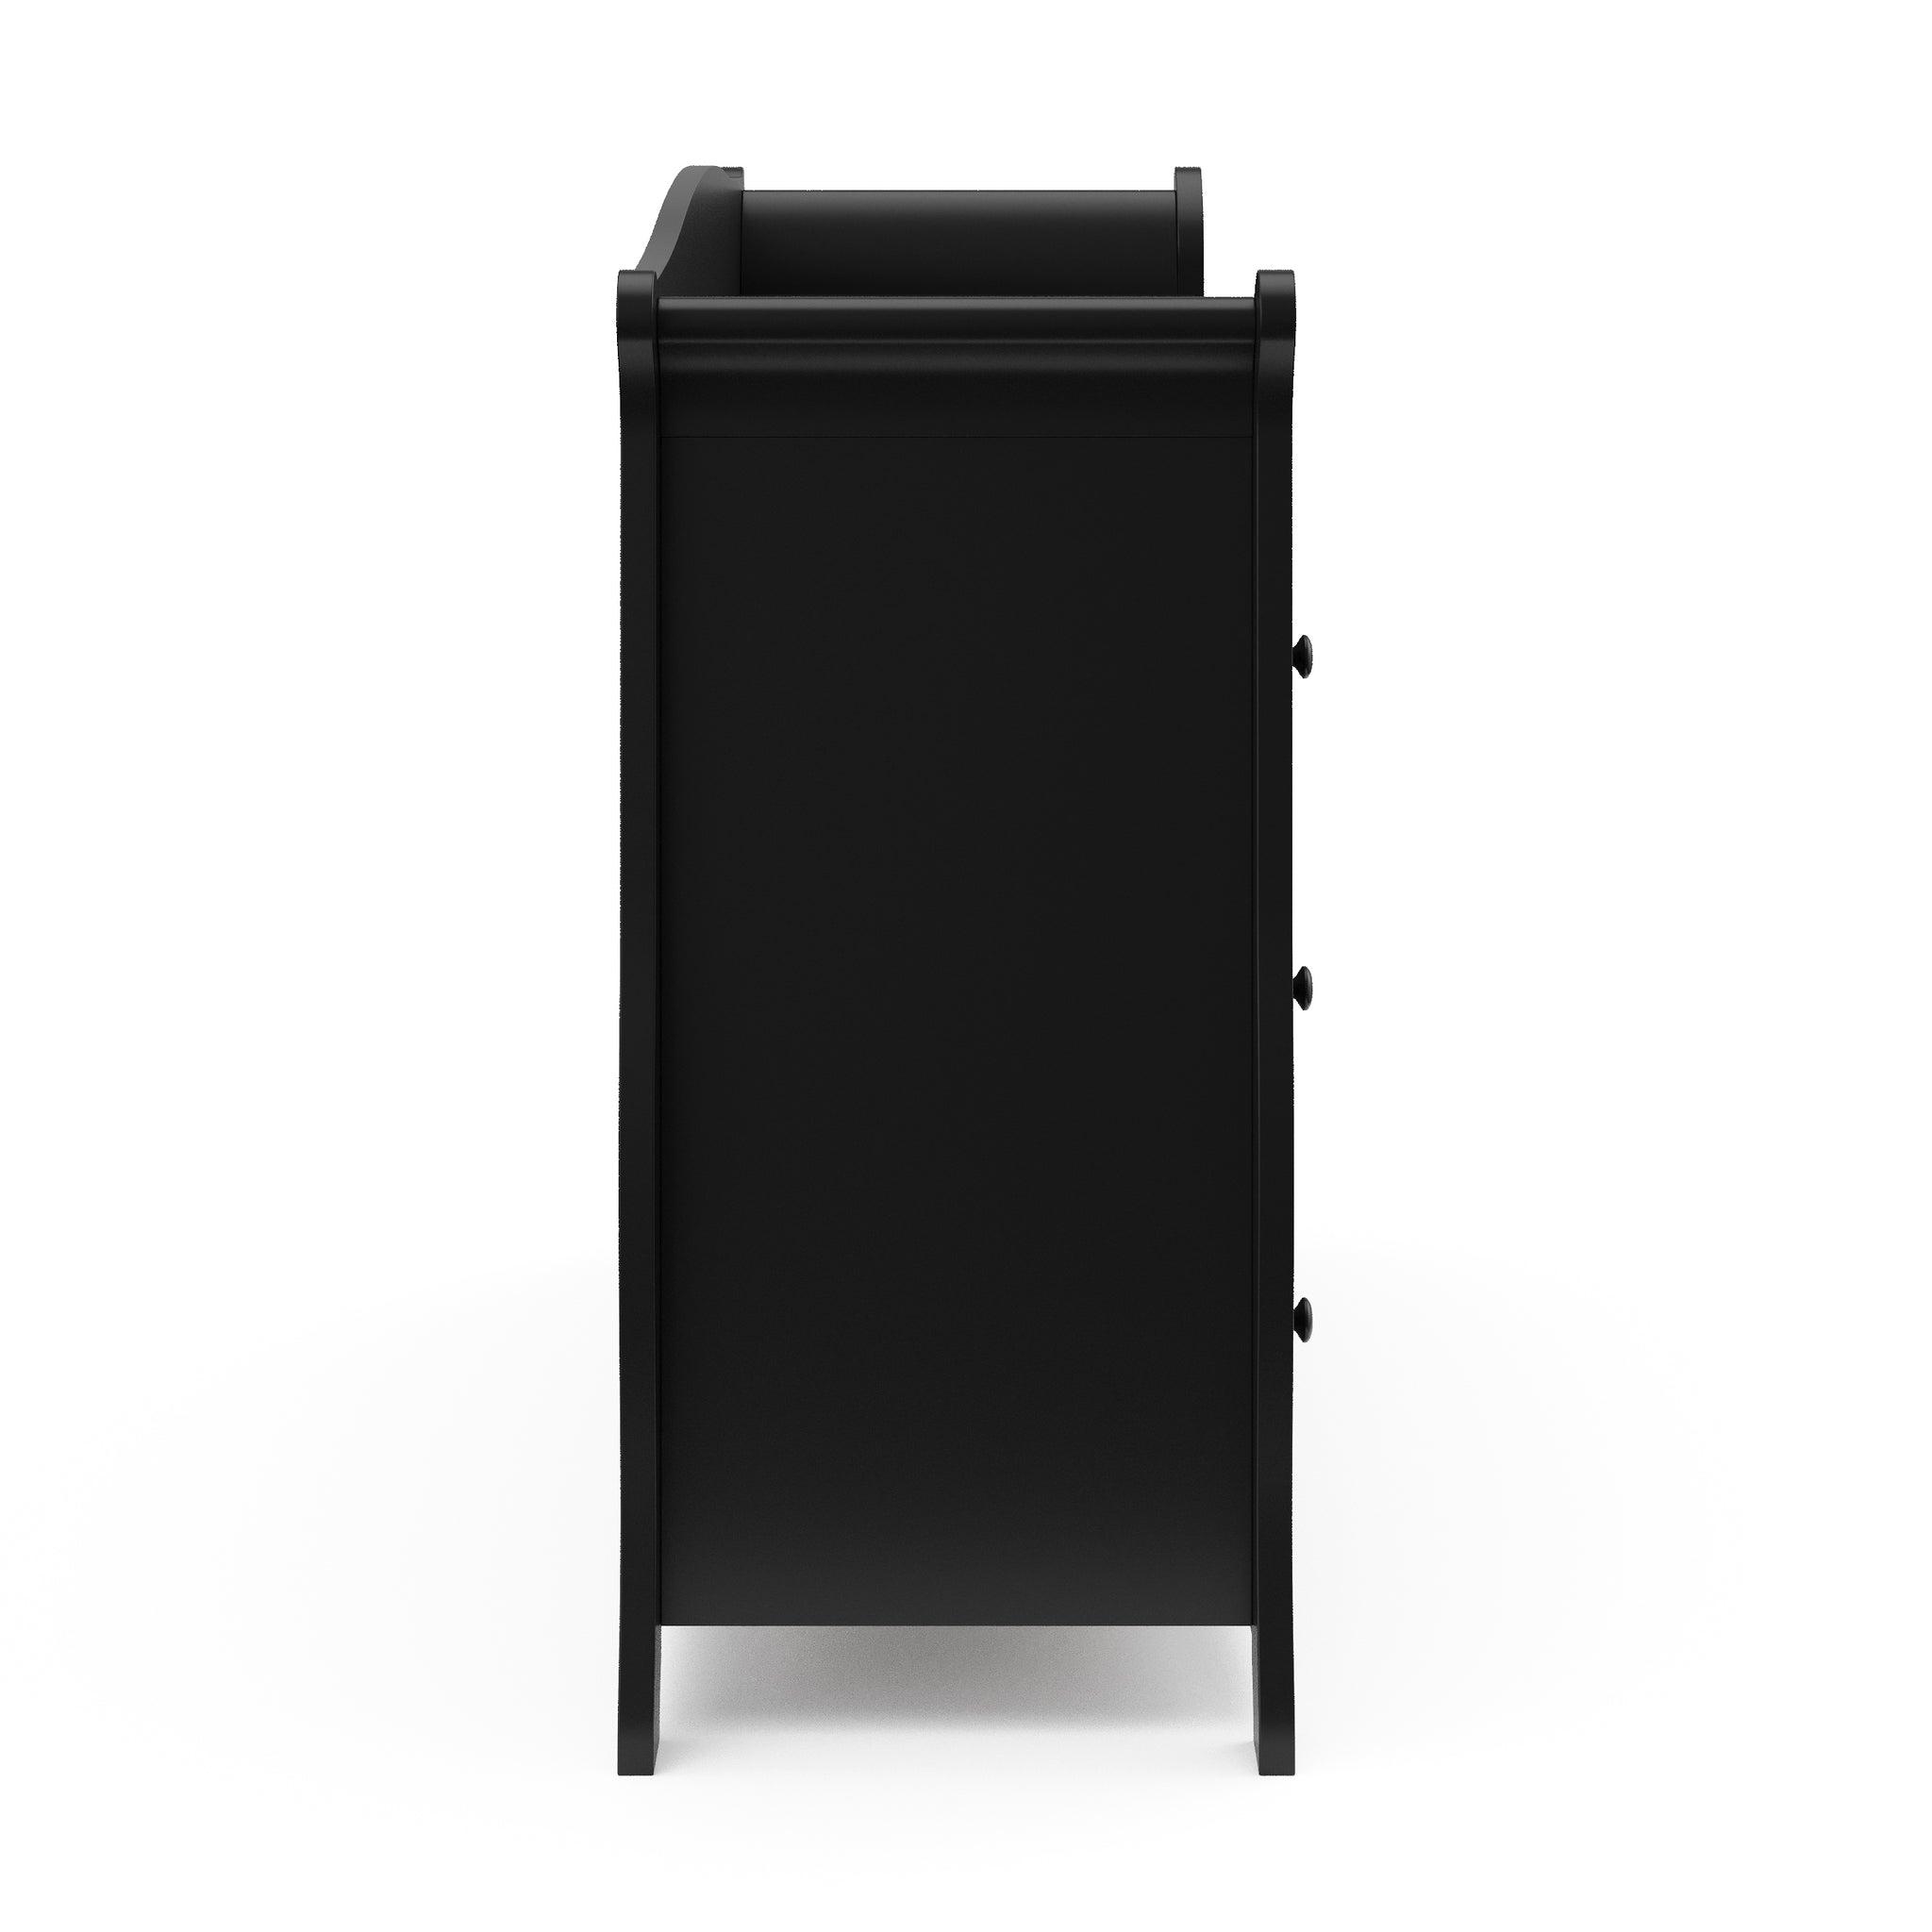 Side view of Black 6 drawer dresser